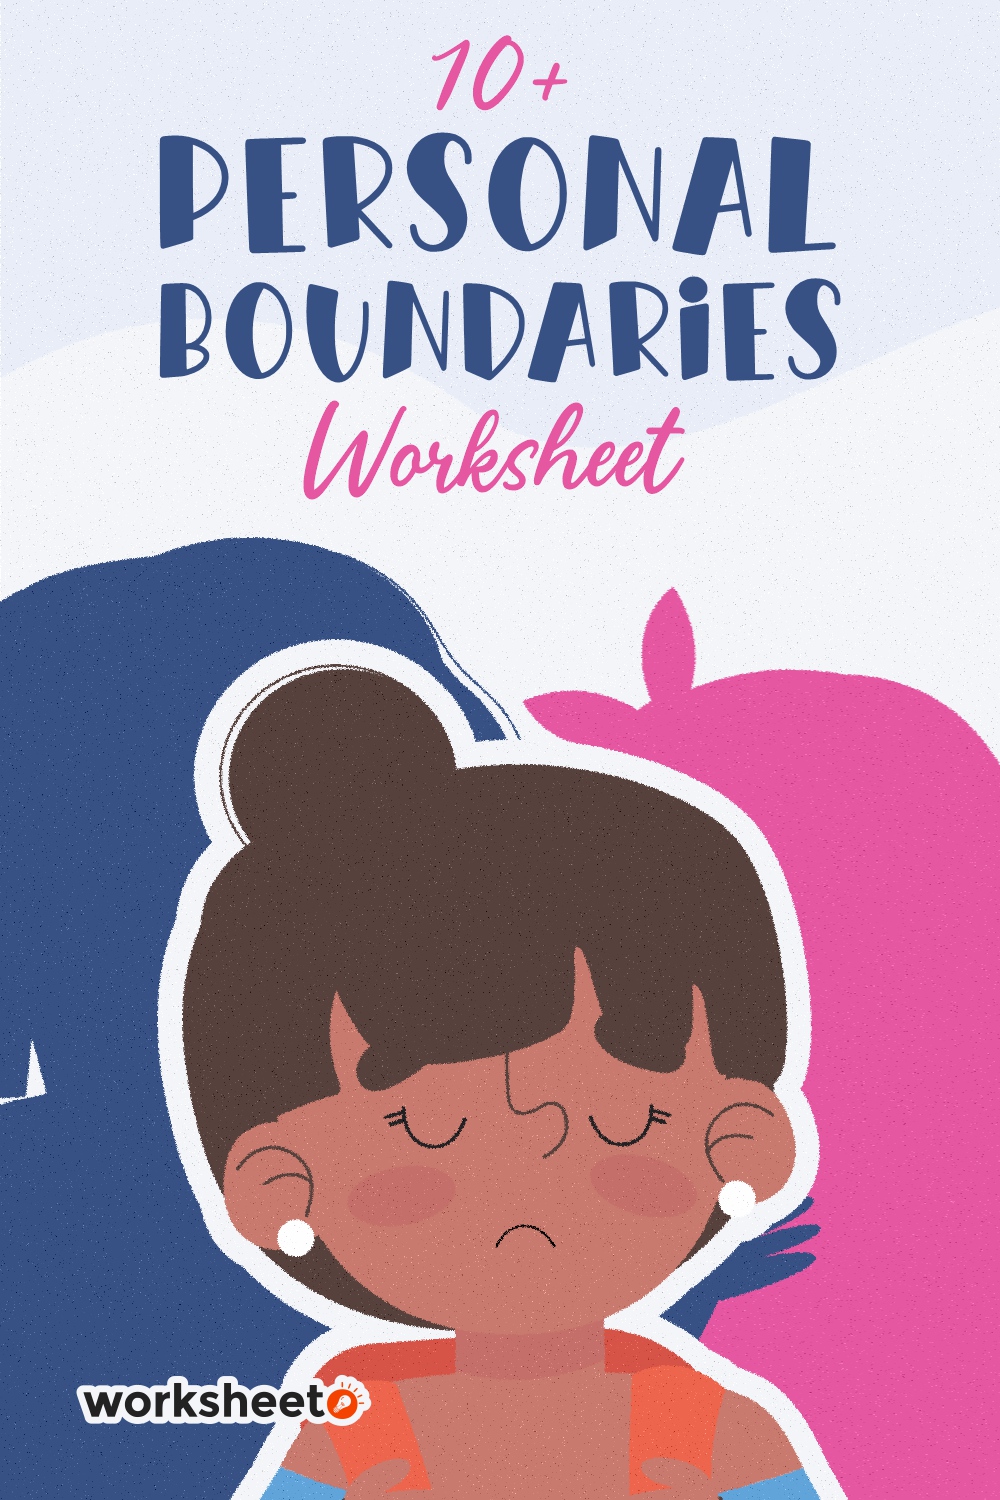 16 Images of Personal Boundaries Worksheet.pdf